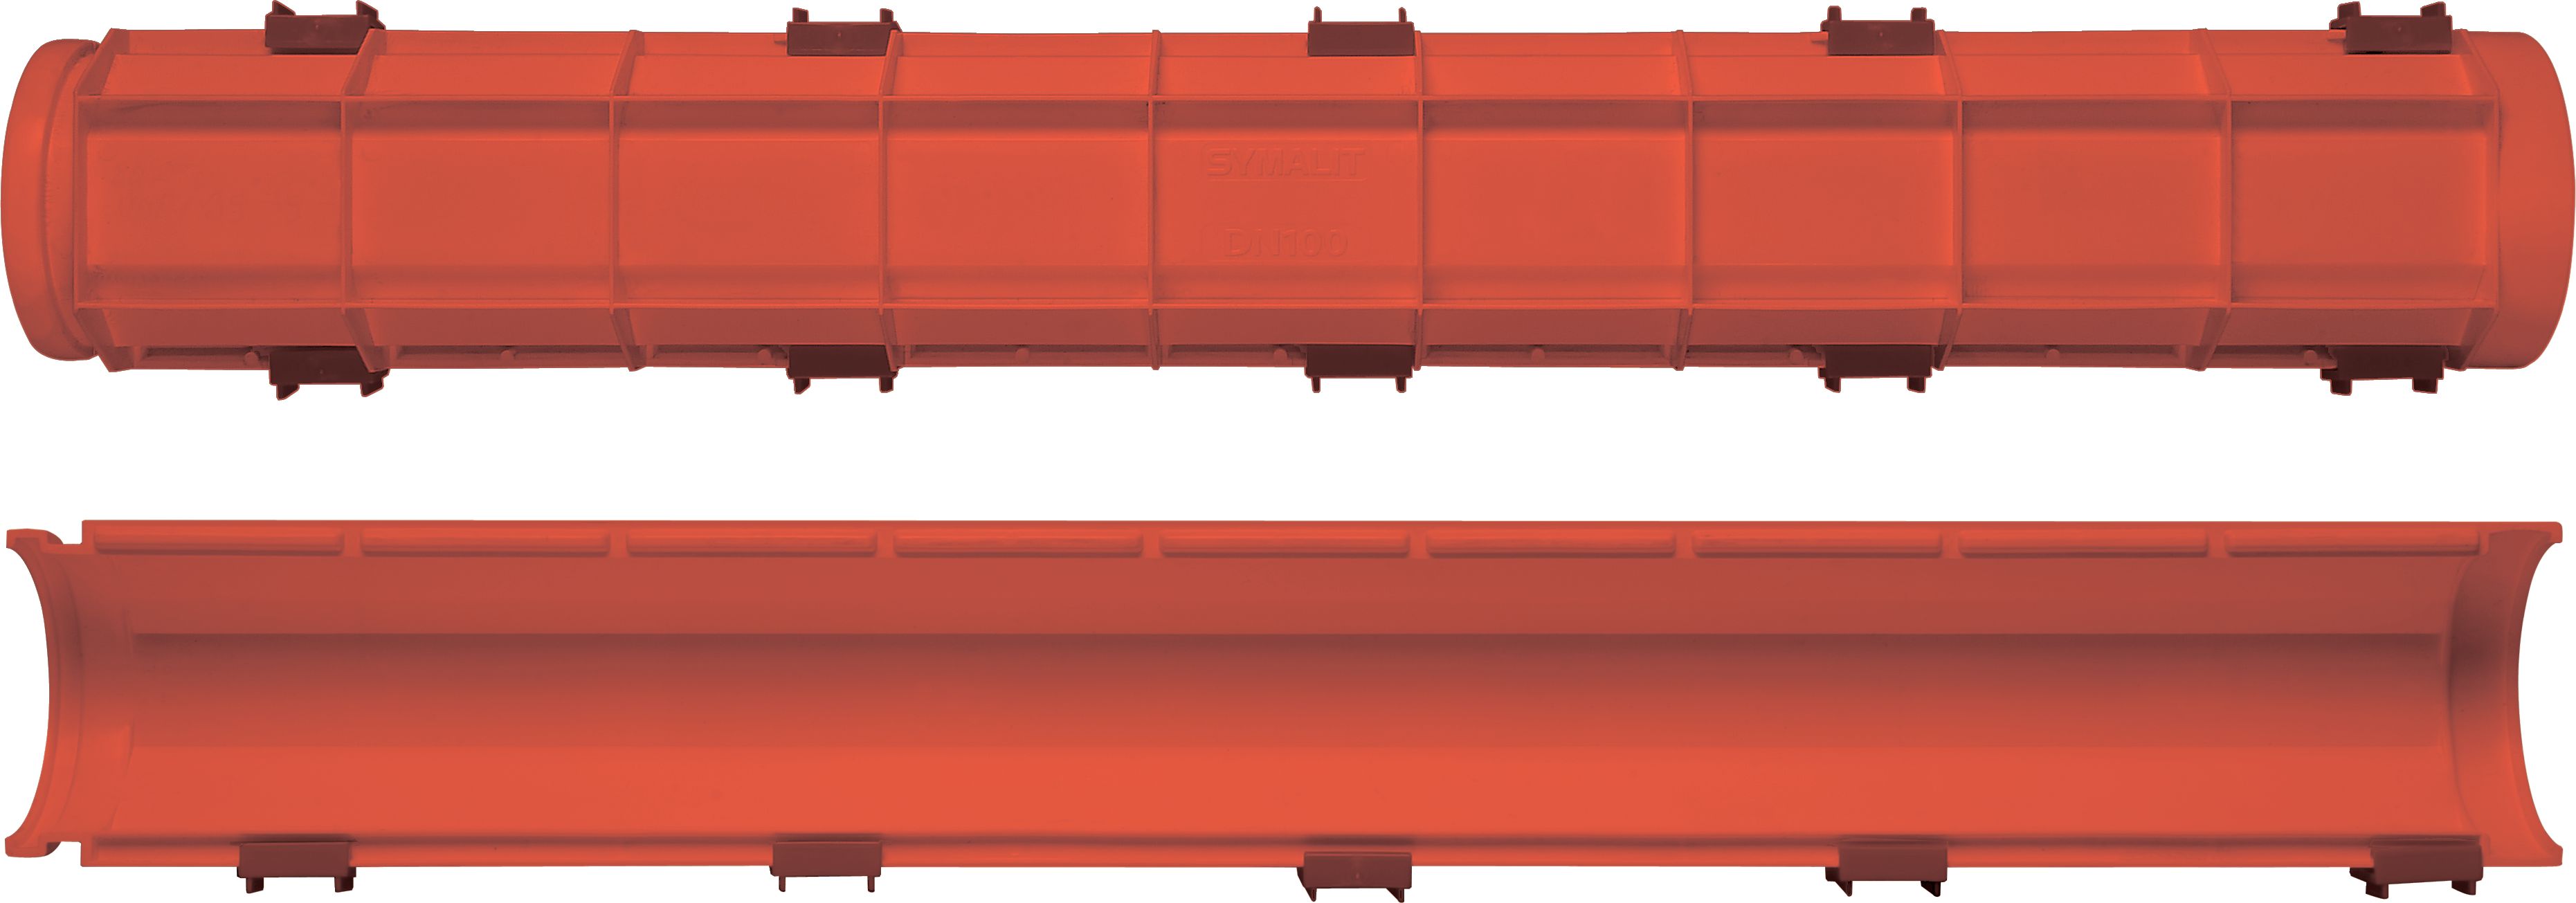 SYSPRO-Kabelhalbschalen HDPE rot NW: 120mm L:1m ohne Verschlussklemmen - Kabelschutz Formstücke netto